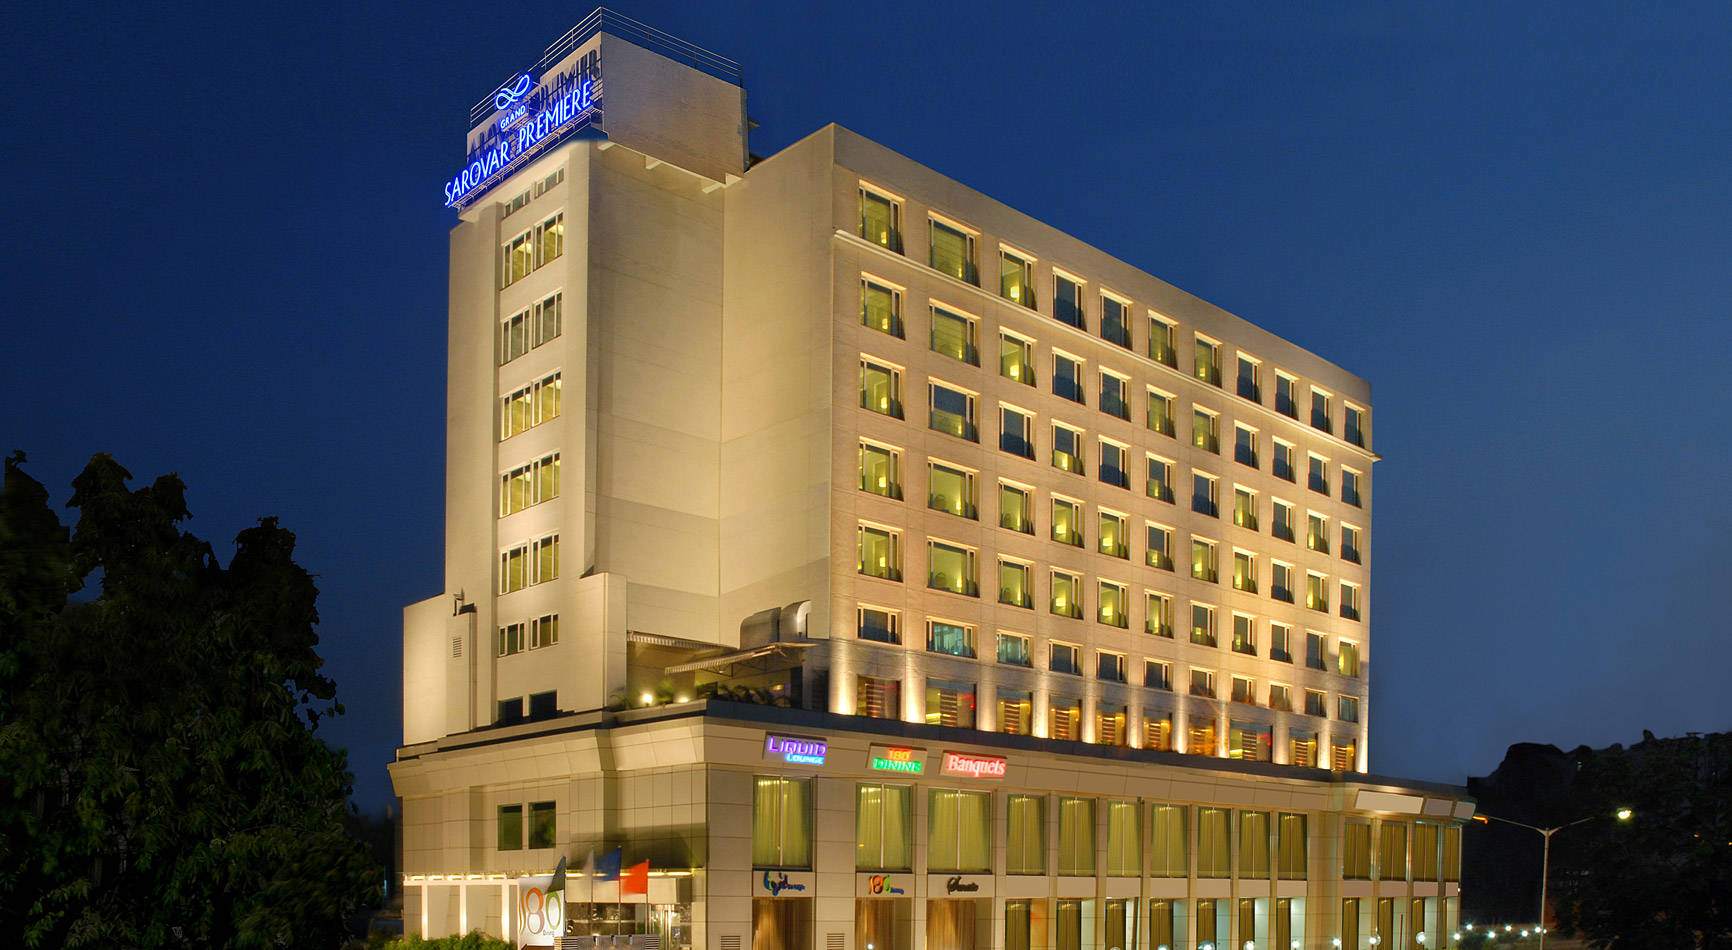 Sarovar Hotels and Resorts